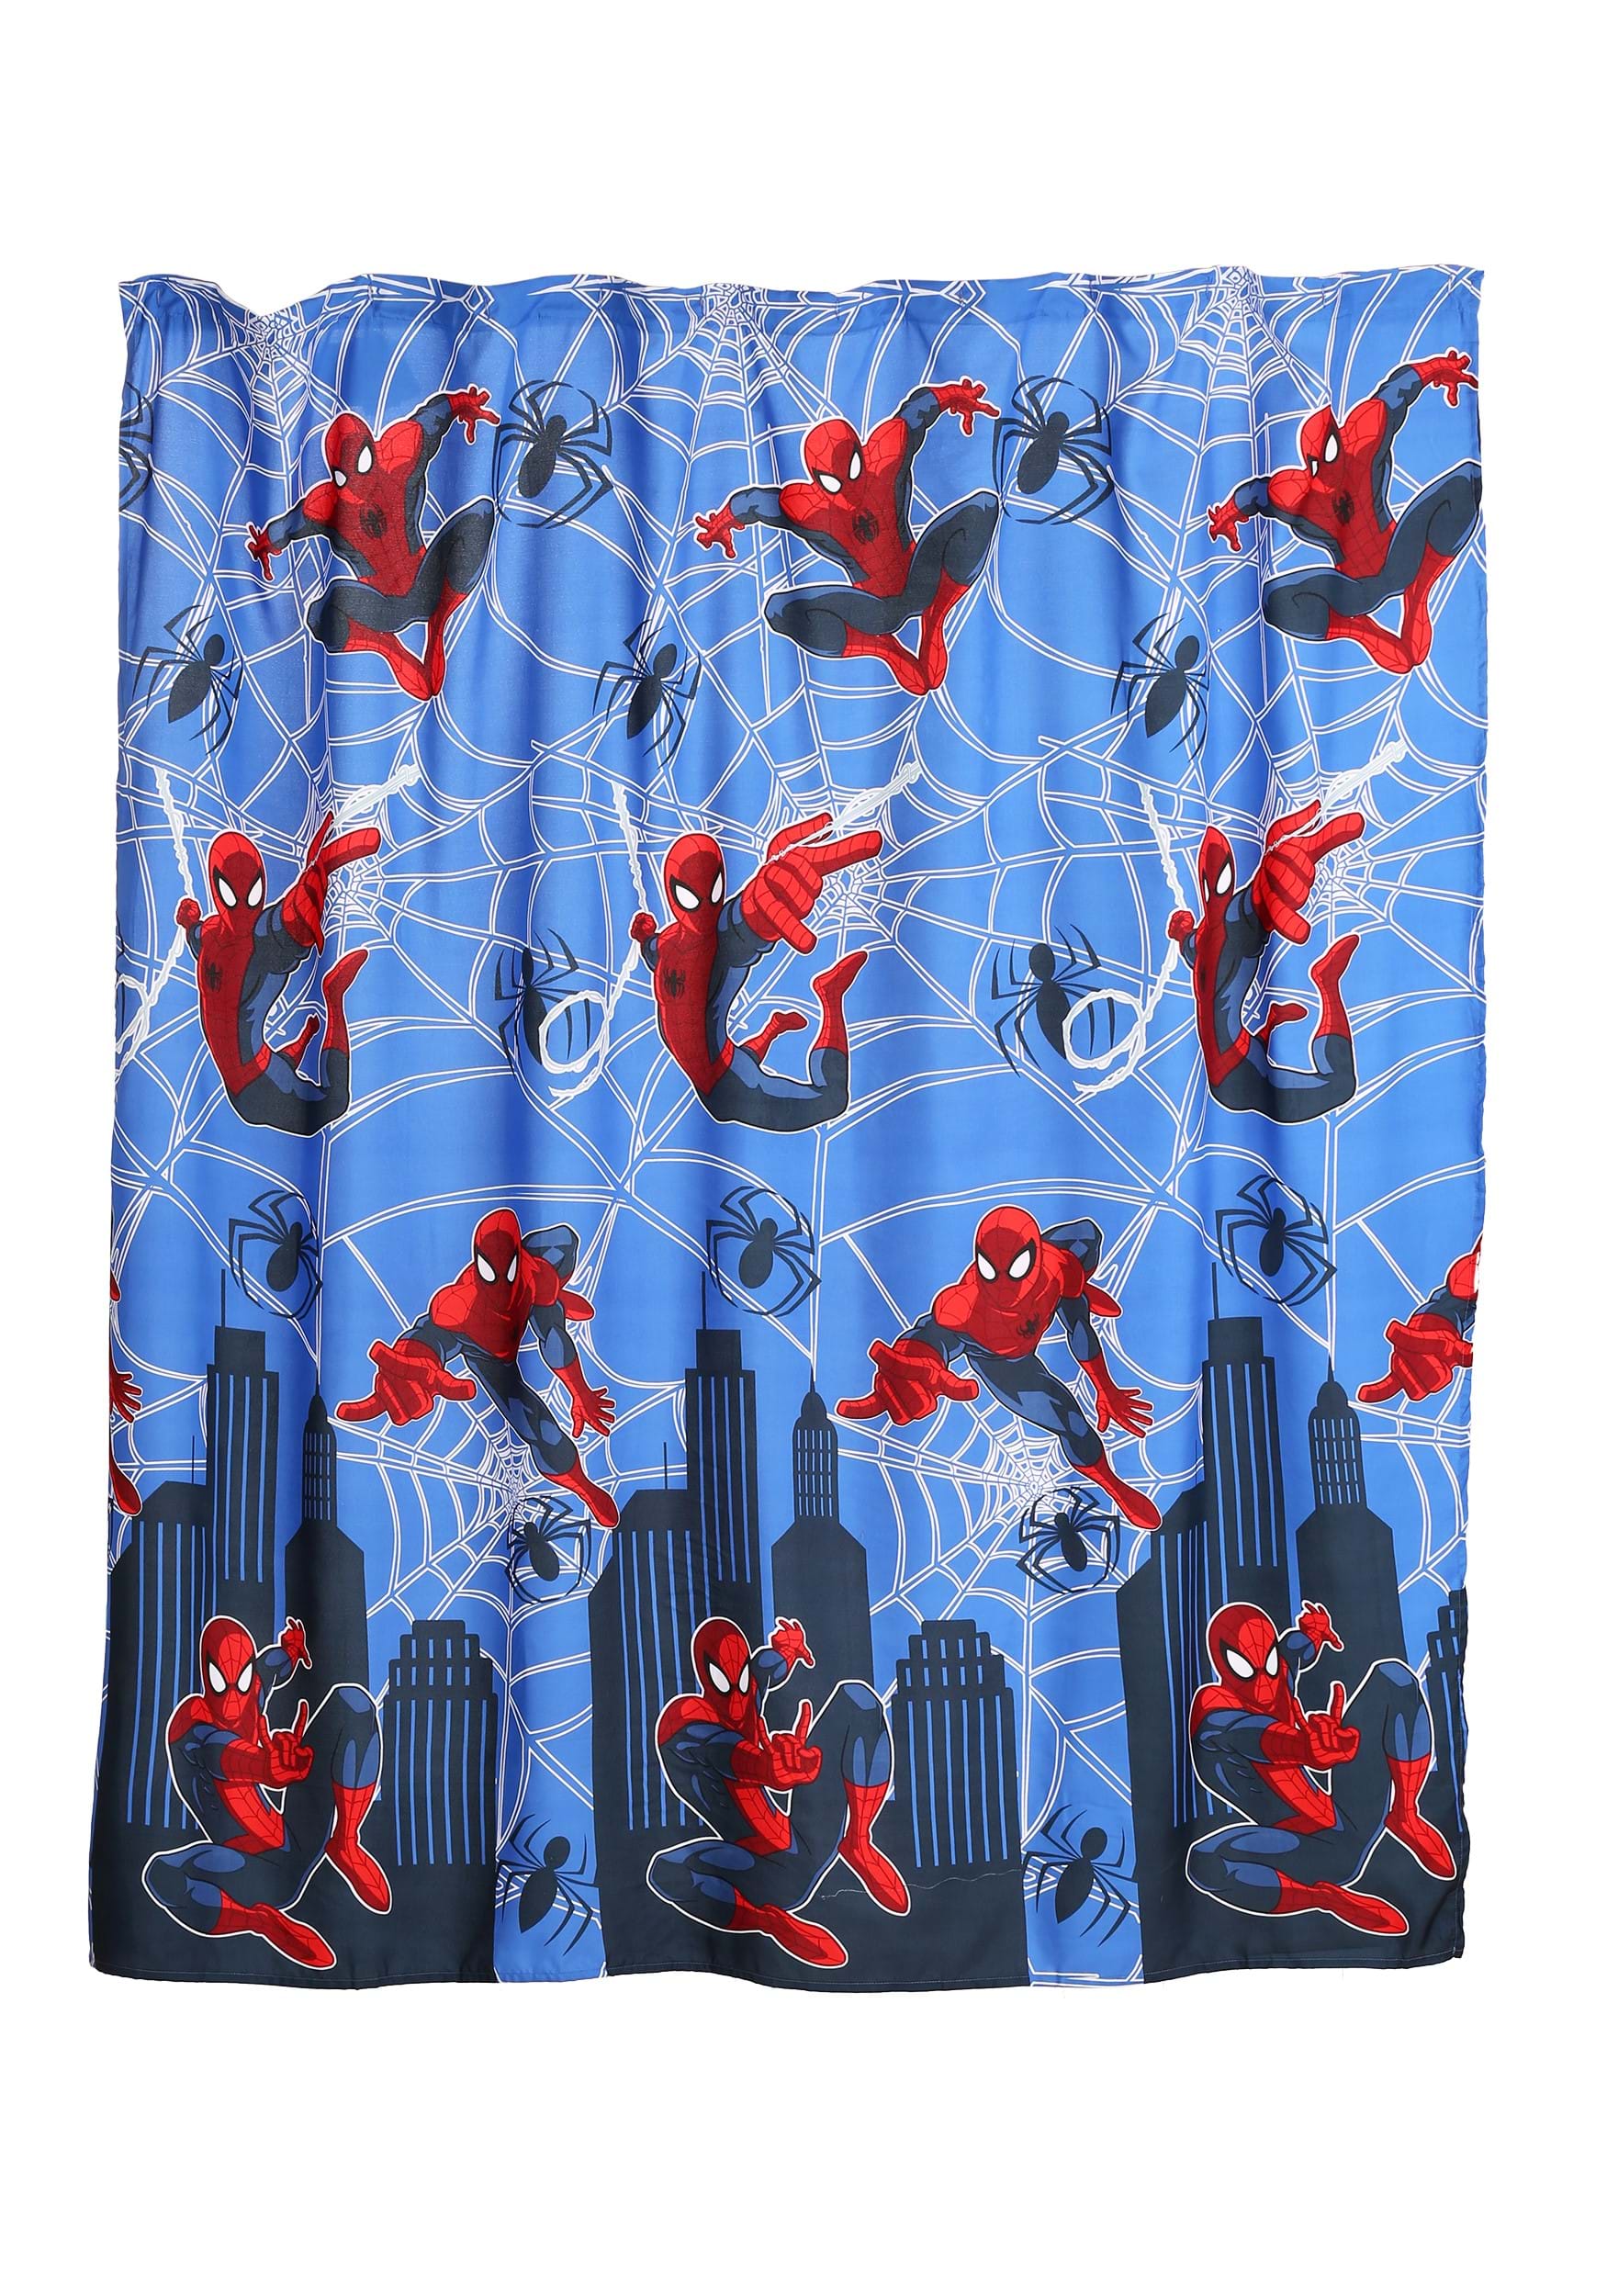 Funny Deadpool In The Bathroom Print Shower Curtain Size 48x72 60x72 66x72 Inch